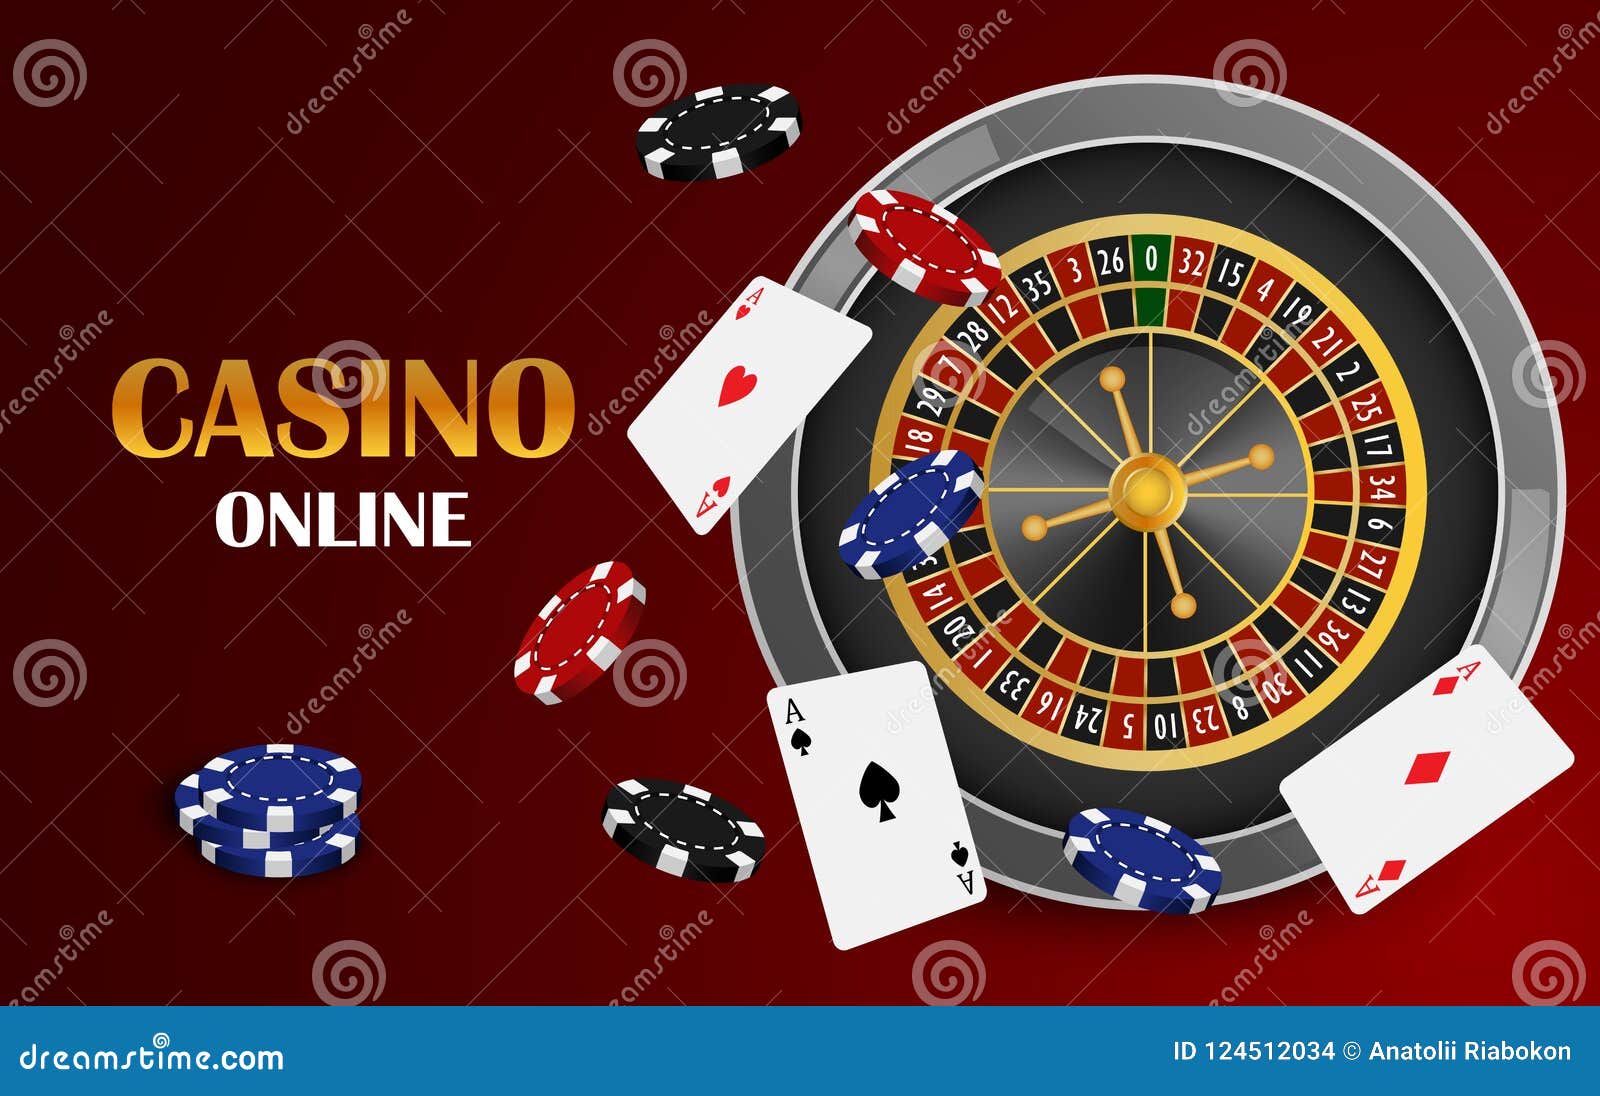 casino online argentina bono sin deposito